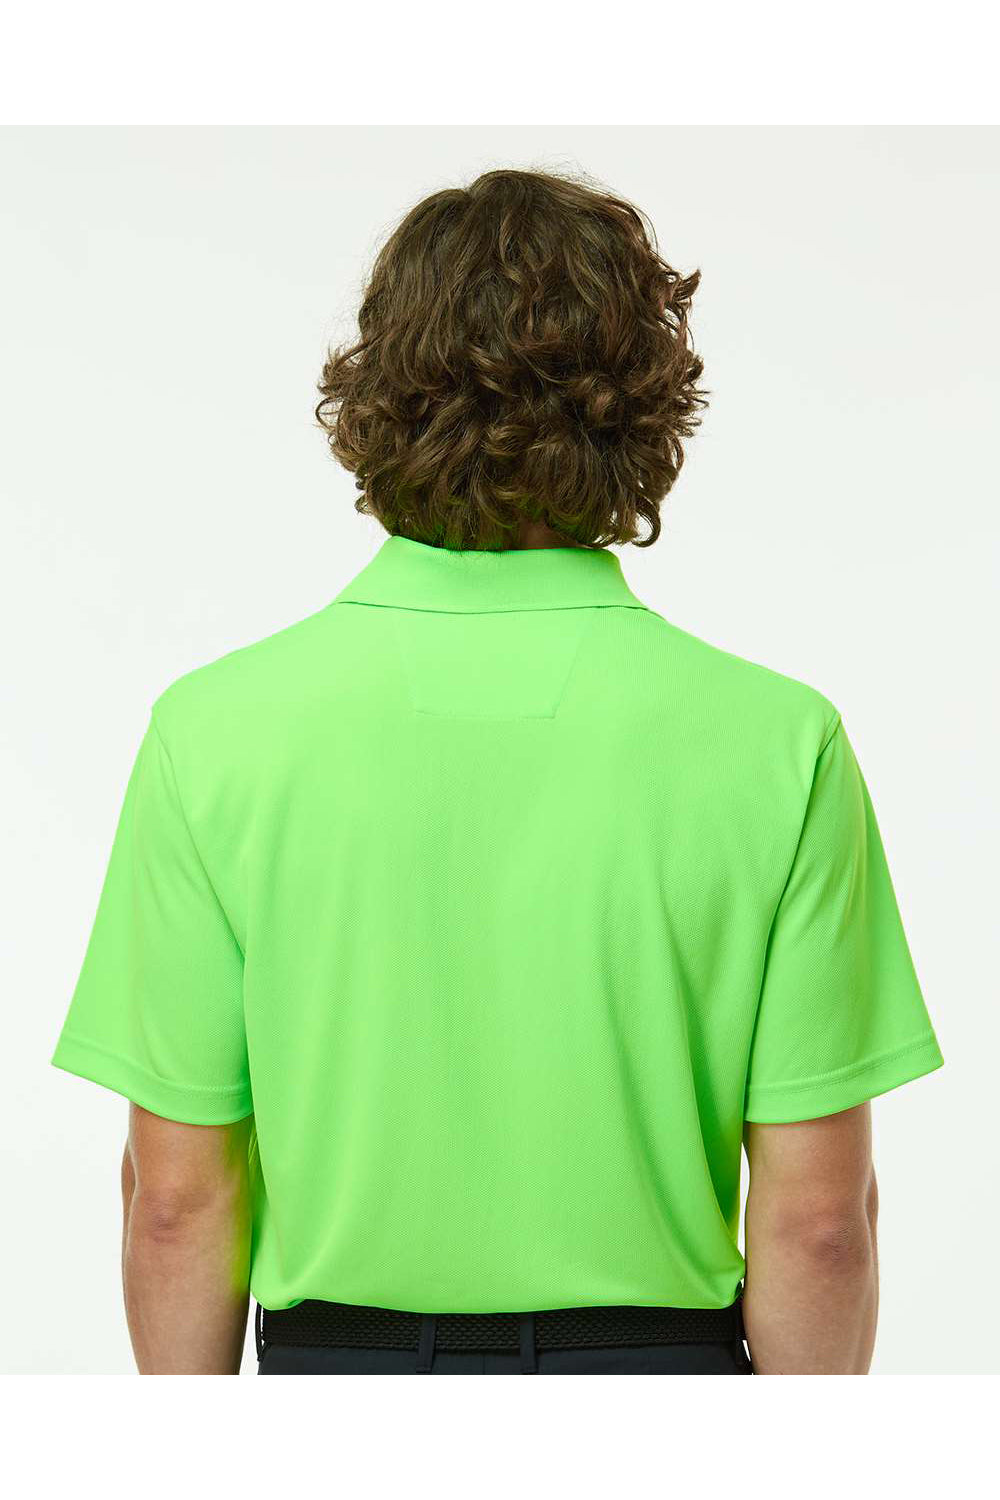 Paragon 100 Mens Saratoga Performance Mini Mesh Short Sleeve Polo Shirt Neon Lime Green Model Back